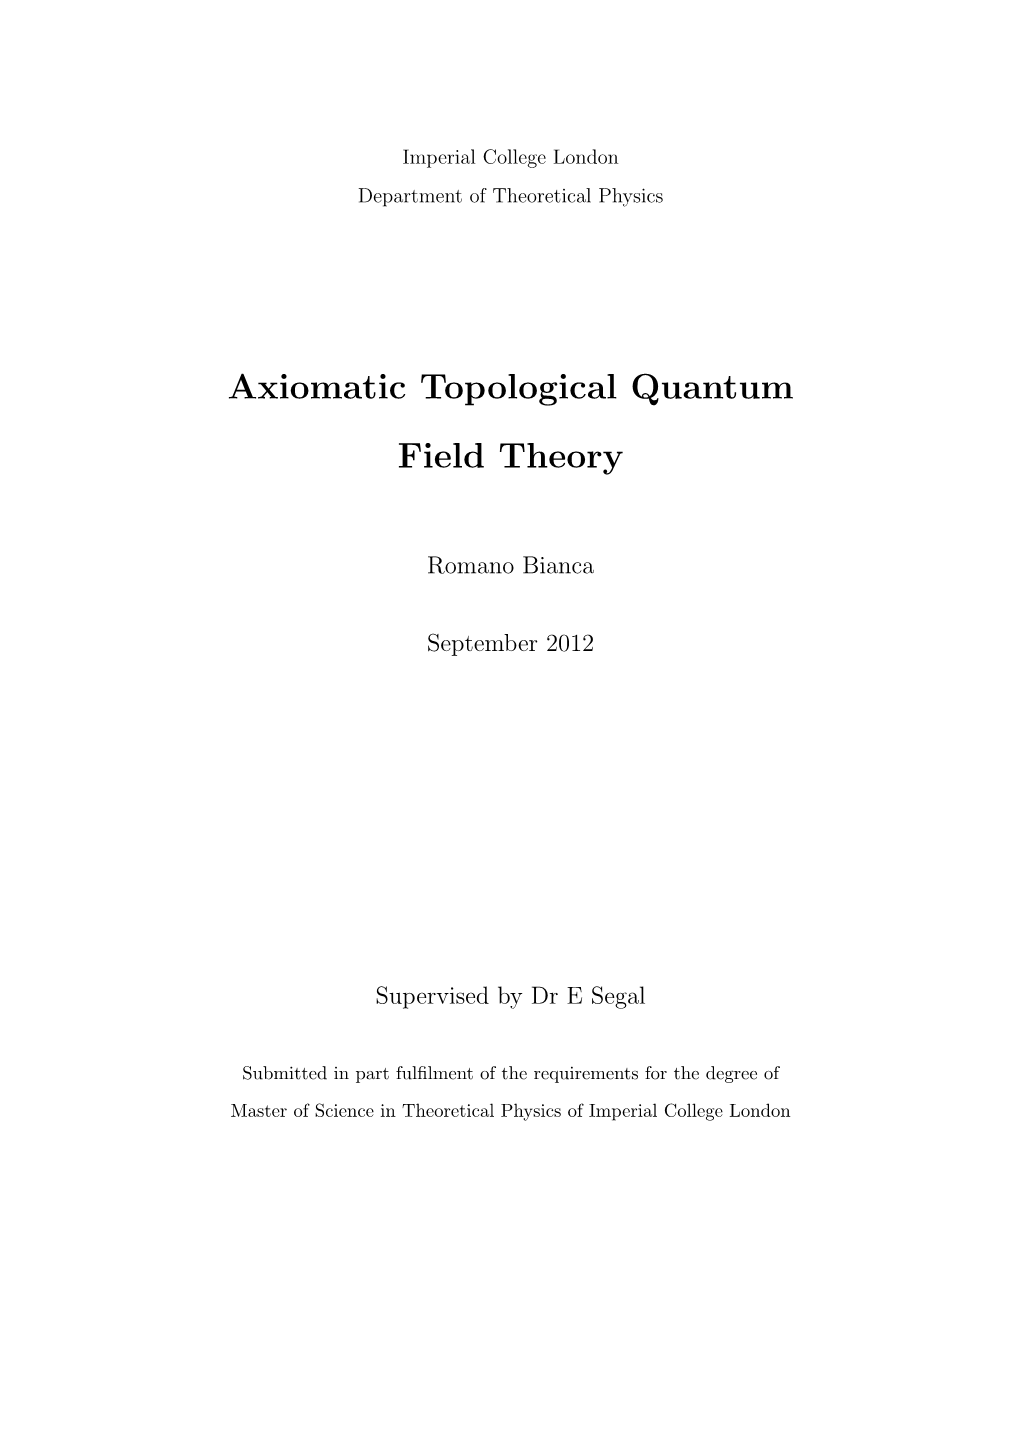 Axiomatic Topological Quantum Field Theory